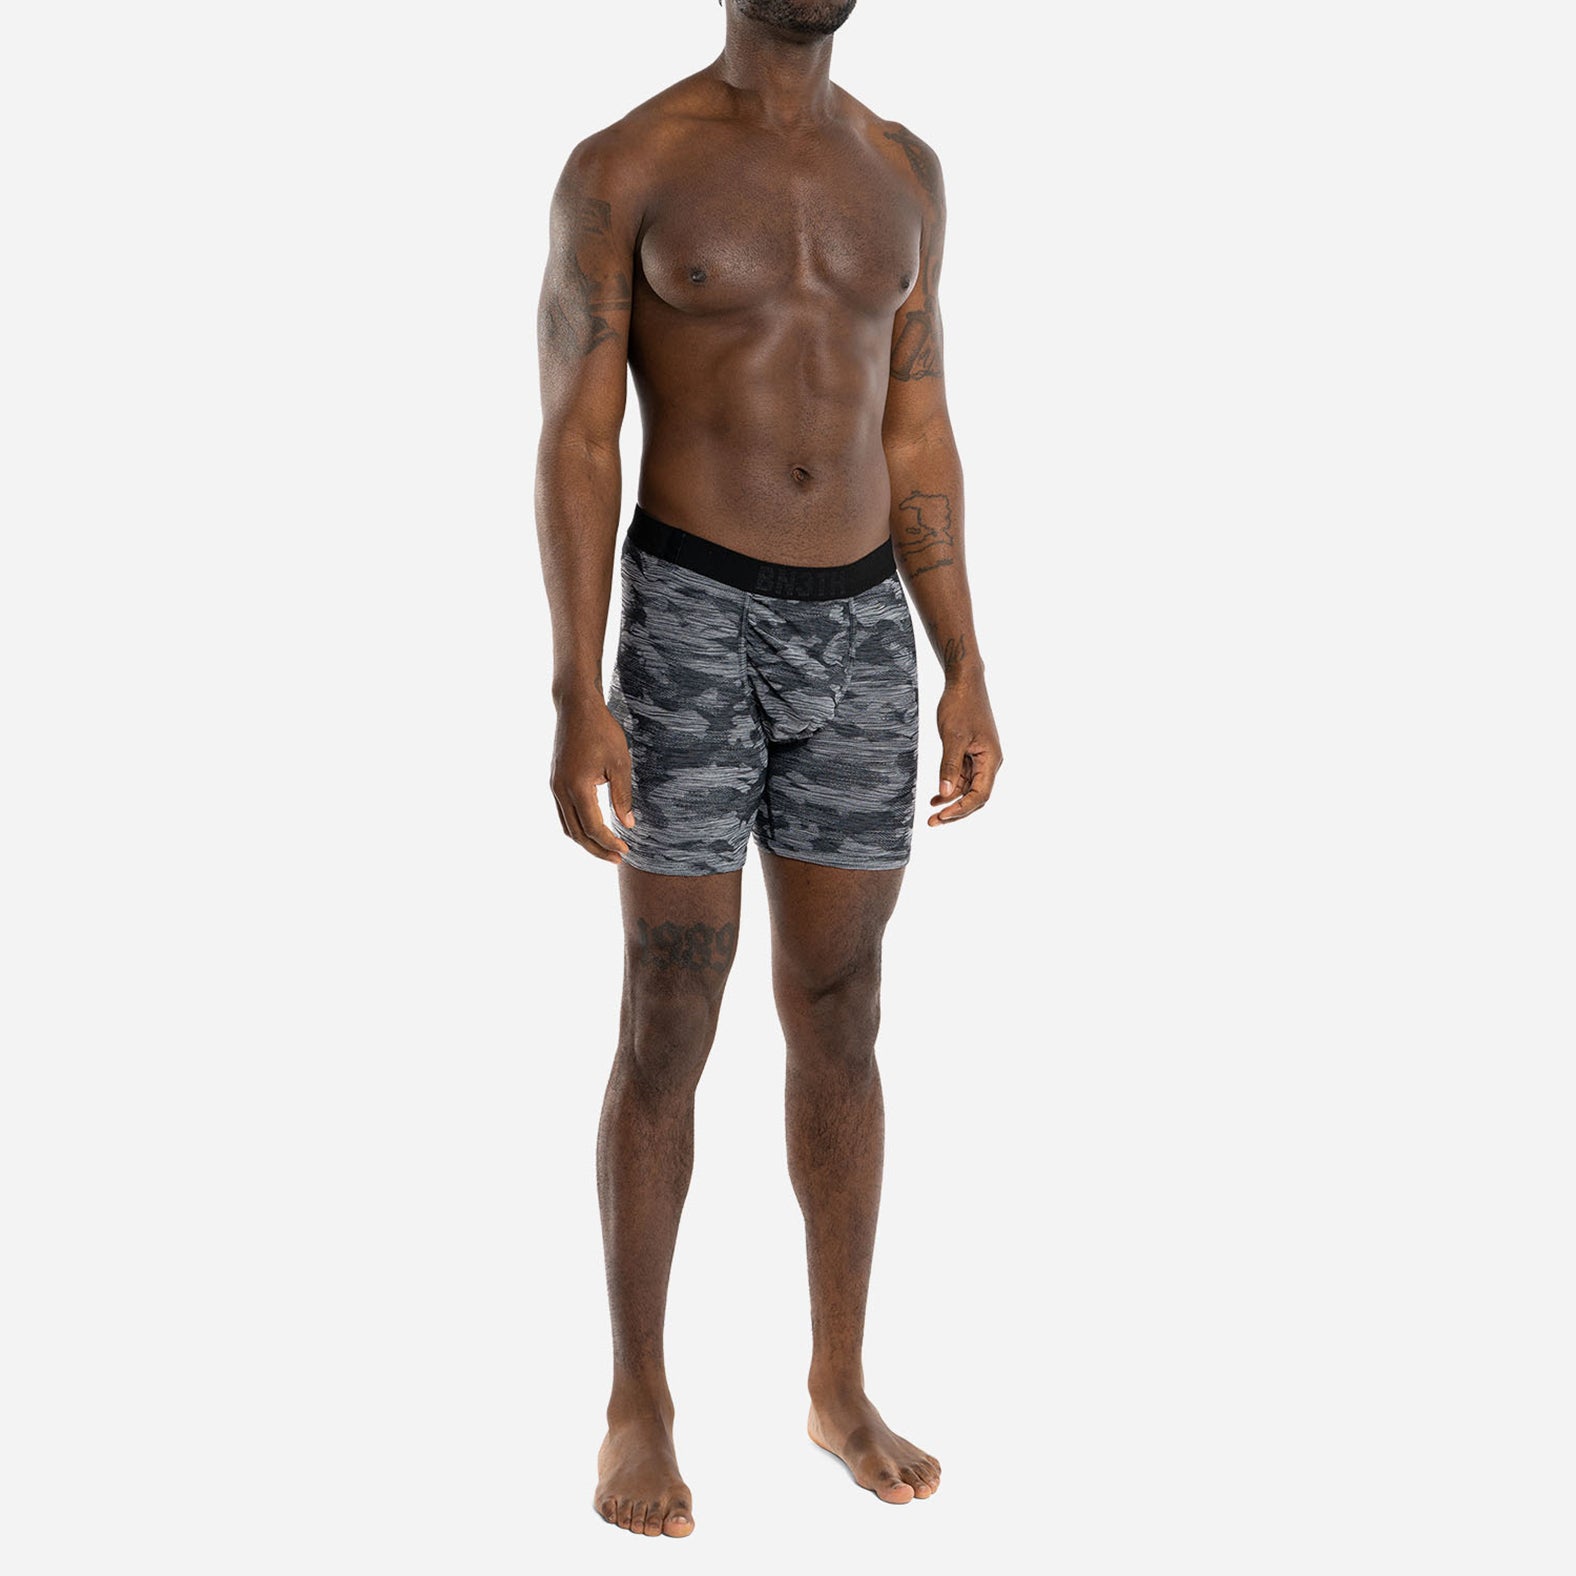 Hero Knit Boxer Brief: Coal  BN3TH Underwear –